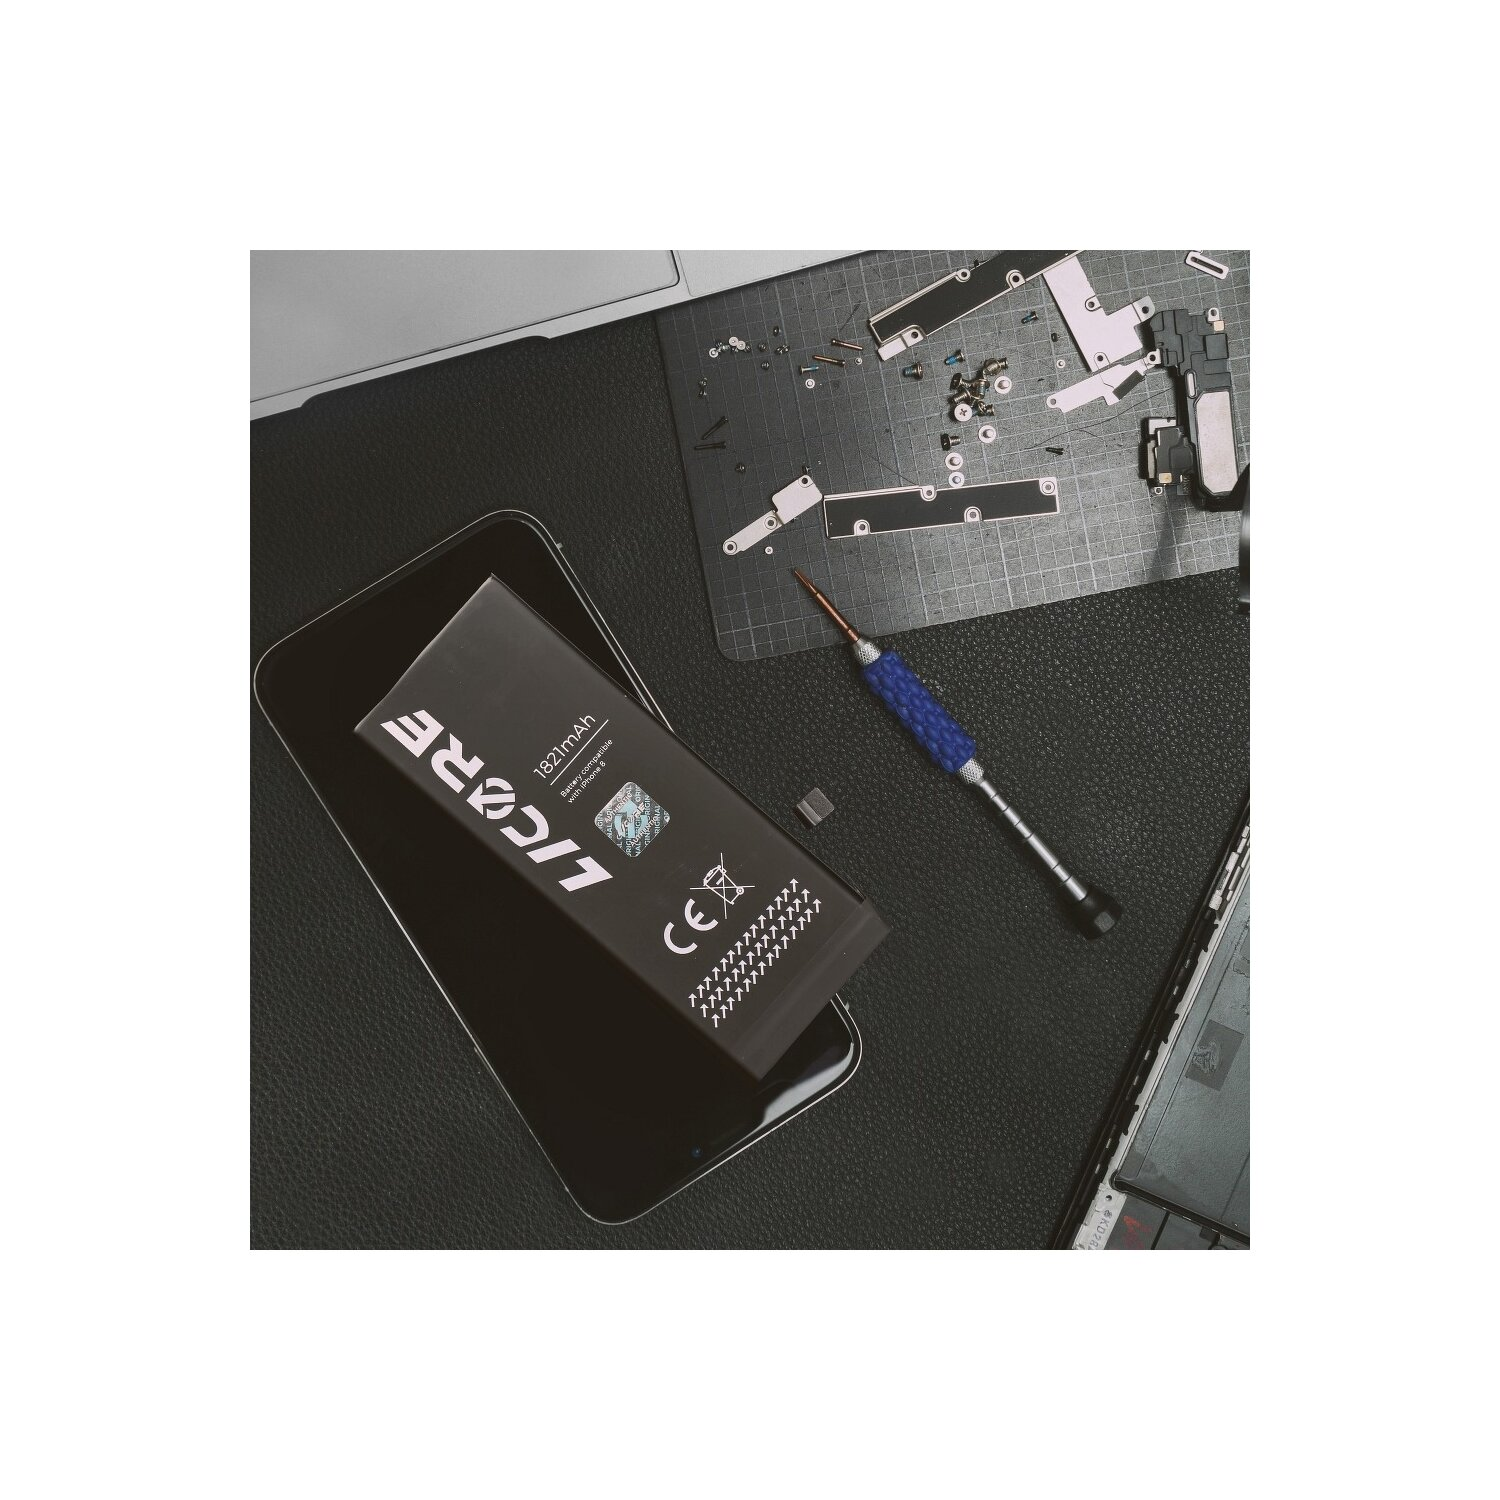 COFI Licore Akku Ersatz kompatibel li-Ion 5S Akku iPhone 1560mAh mit